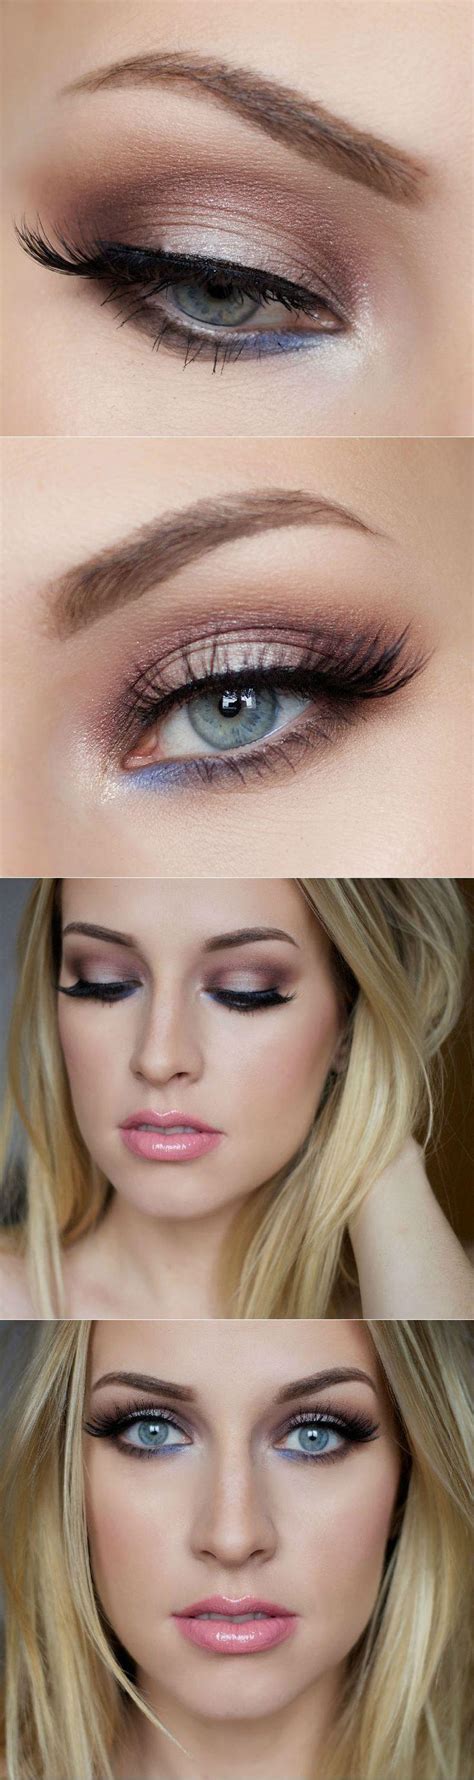 Makeup Makeup Tips For Blue Eyes And Fair Skin 2535850 Weddbook